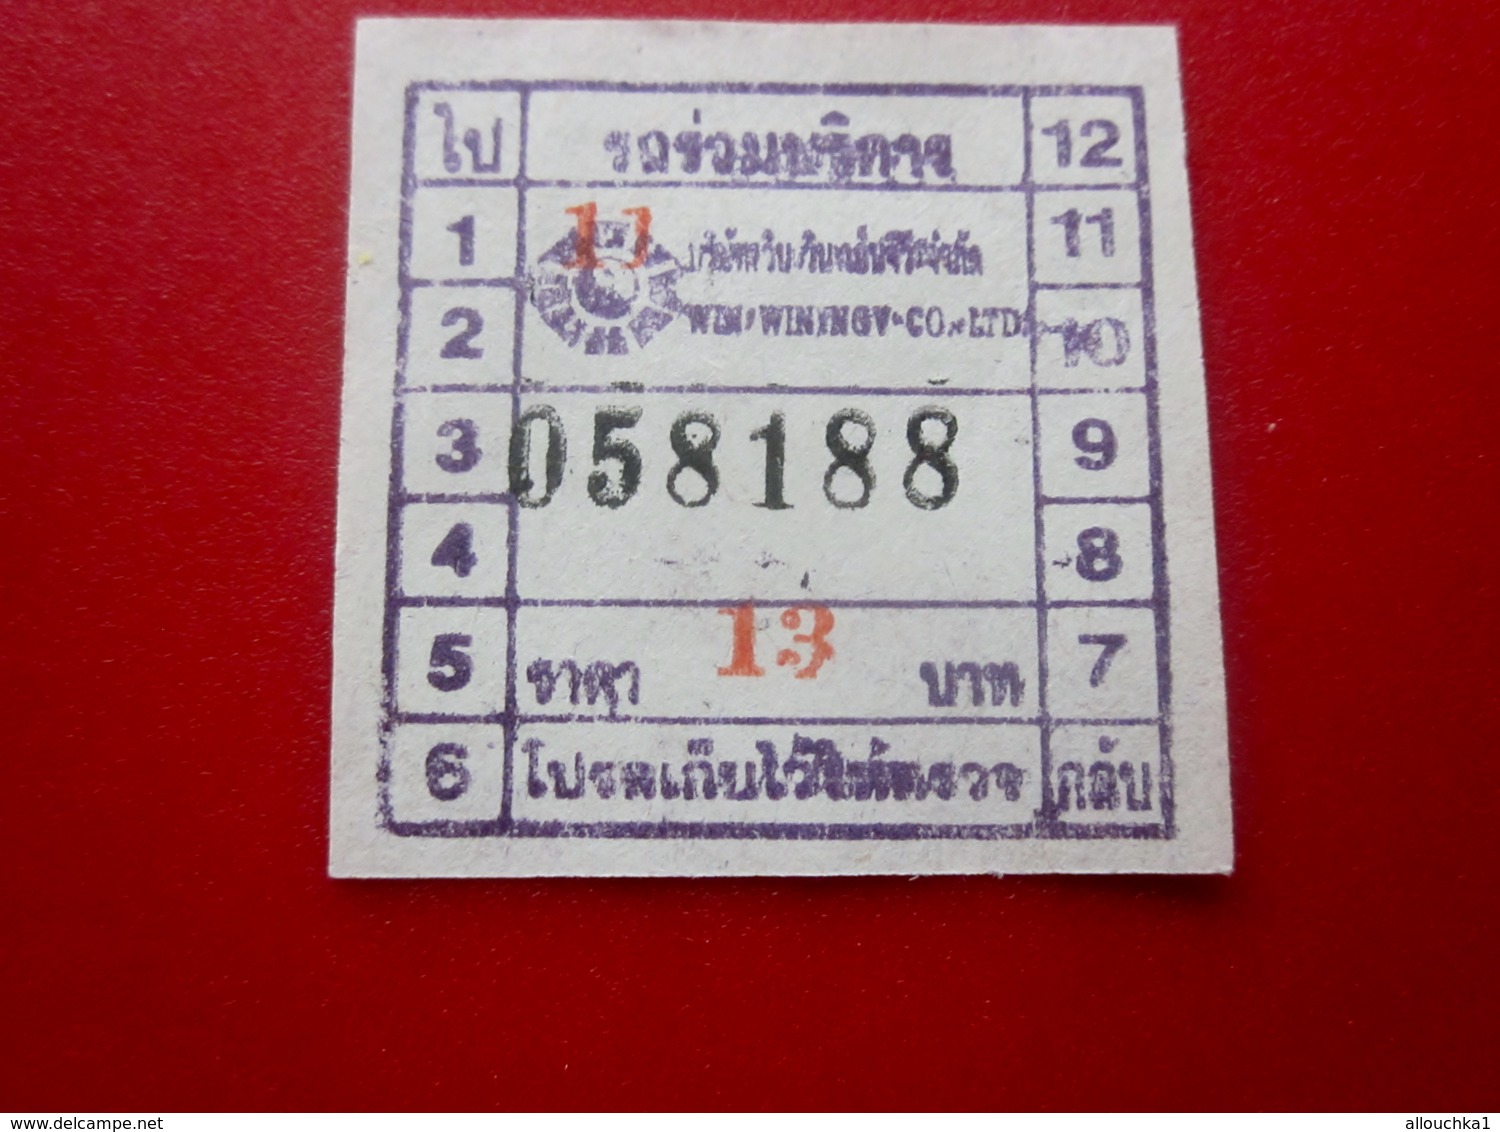 THAILAND THAILANDE -Boleto De Tren -Titre De Transport Billet Ticket-Tramway,Bus,Autobus,Railway,Métro - World